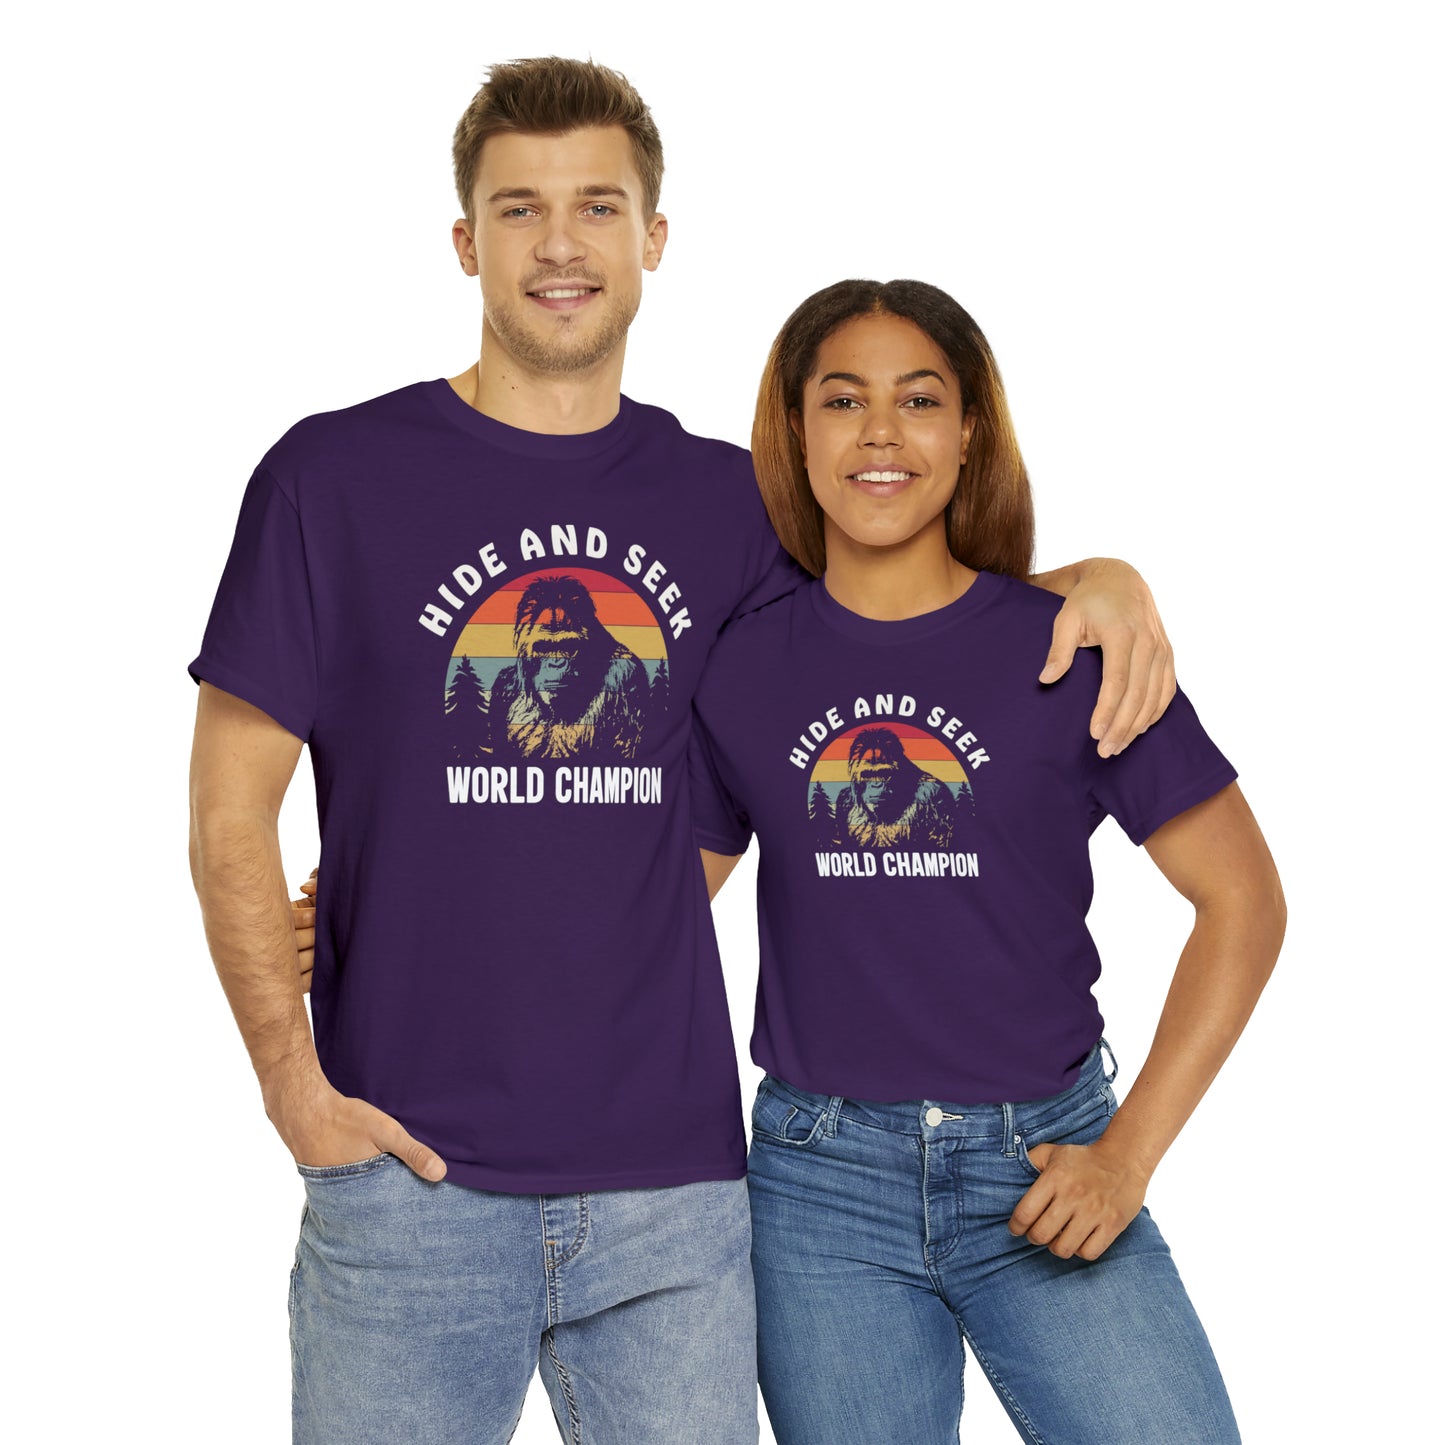 Yeti T-Shirt For Hide And Seek T Shirt For Bigfoot TShirt For World Champion TShirt For Sasquach Shirt For Bigfoot Conspiracy Fan